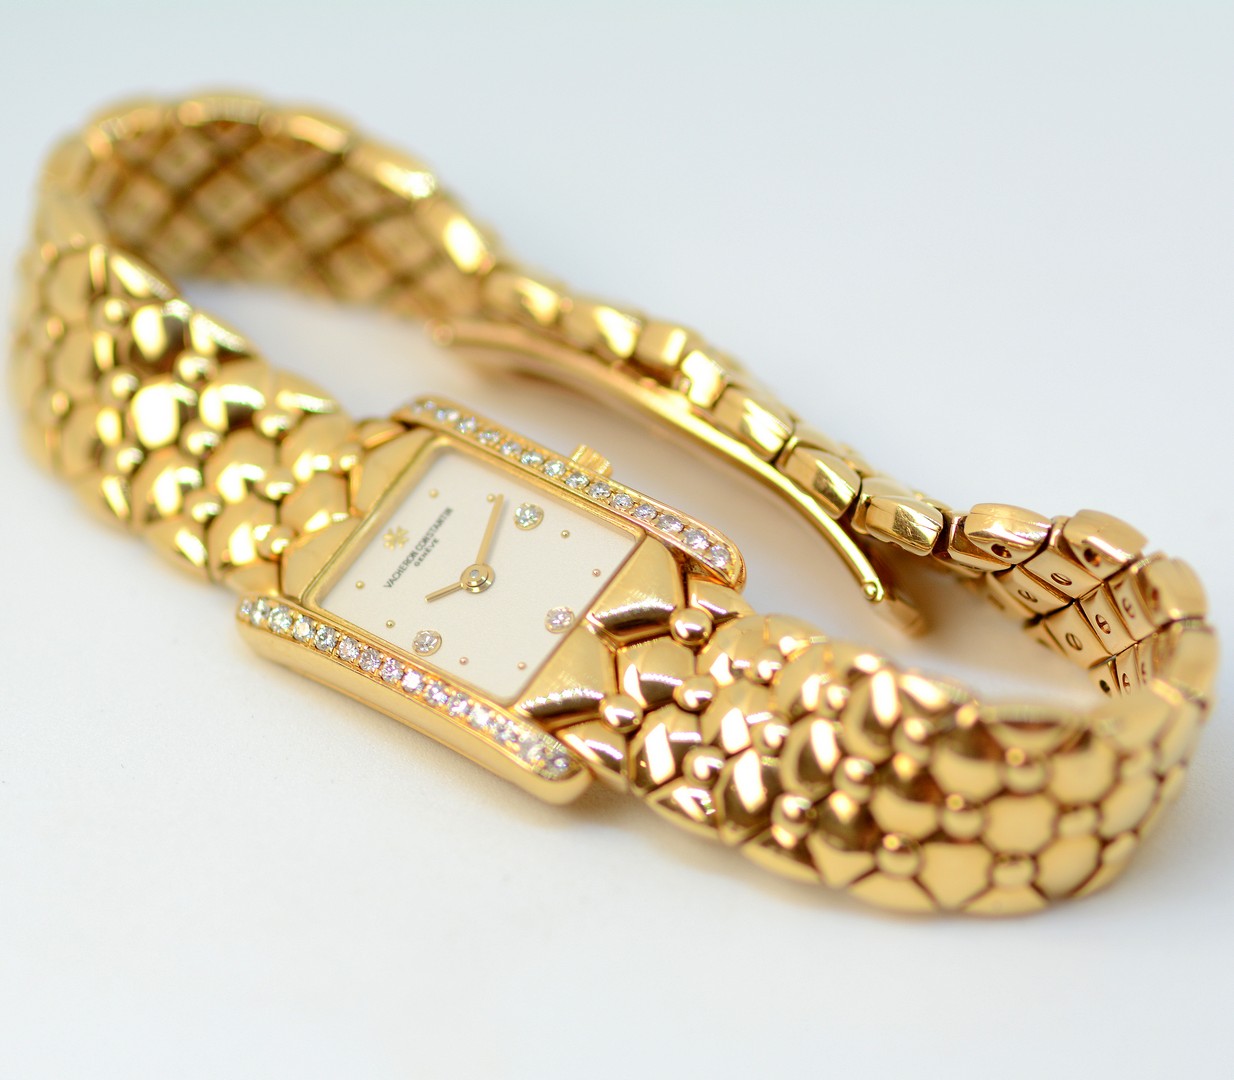 Vacheron Constantin / Ispahan 18K - Diamond - Lady's Yellow gold Wrist Watch - Image 10 of 11